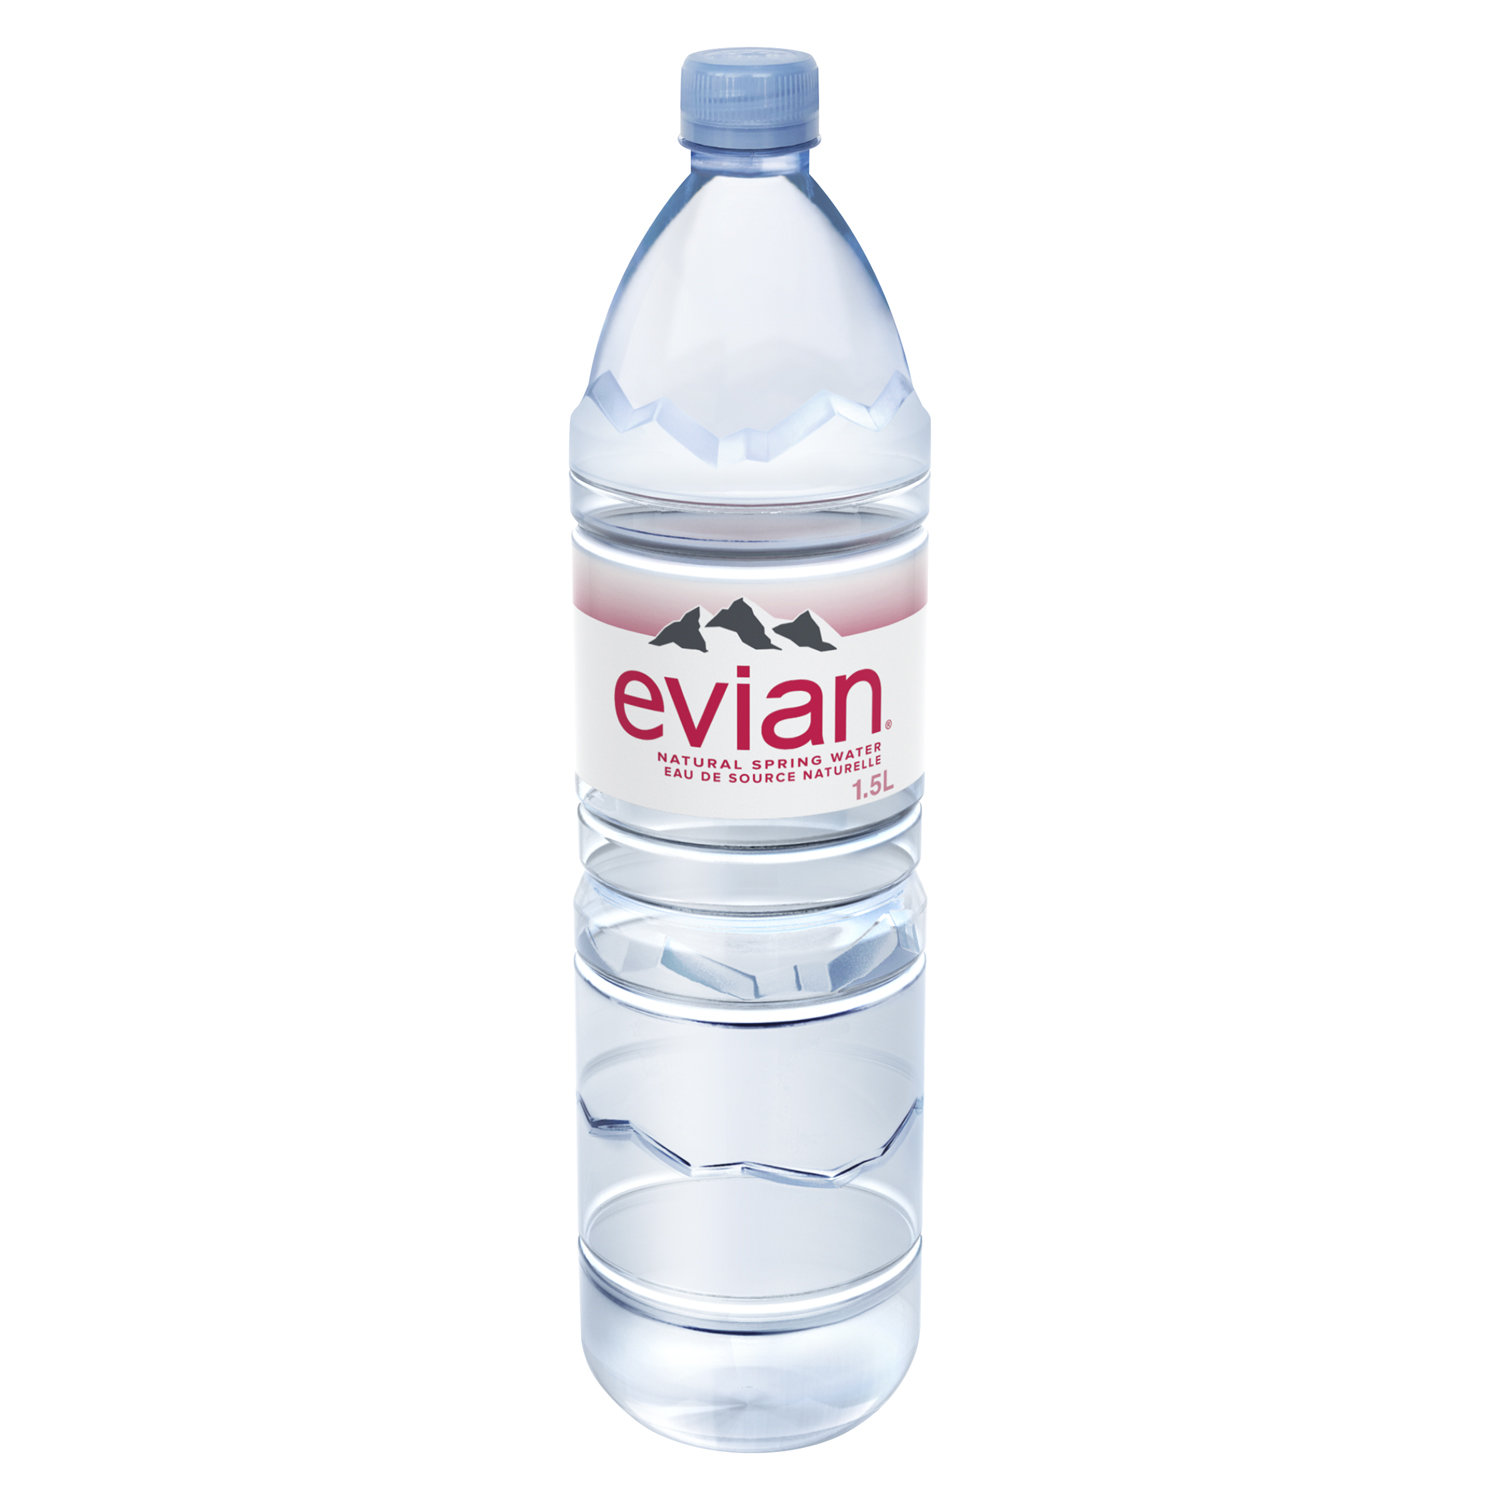 Absolute Distilled Drinking Water (1.5L x 12 bottles)